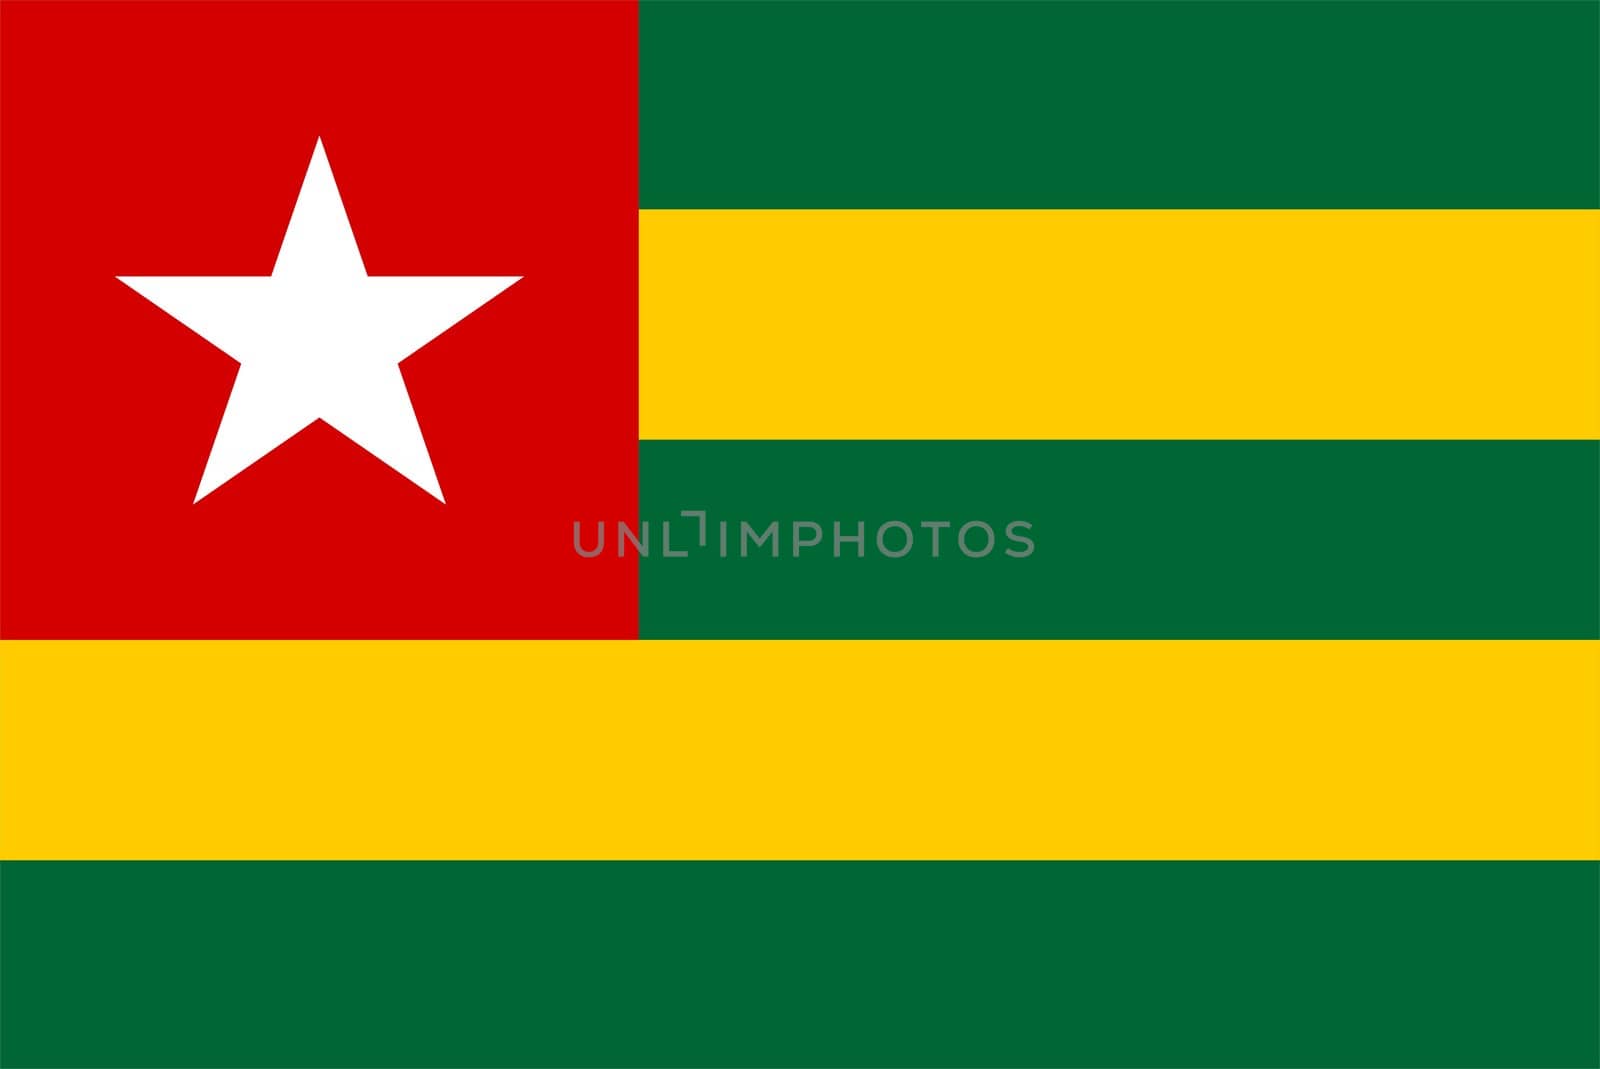 2D illustration of the flag of Togo